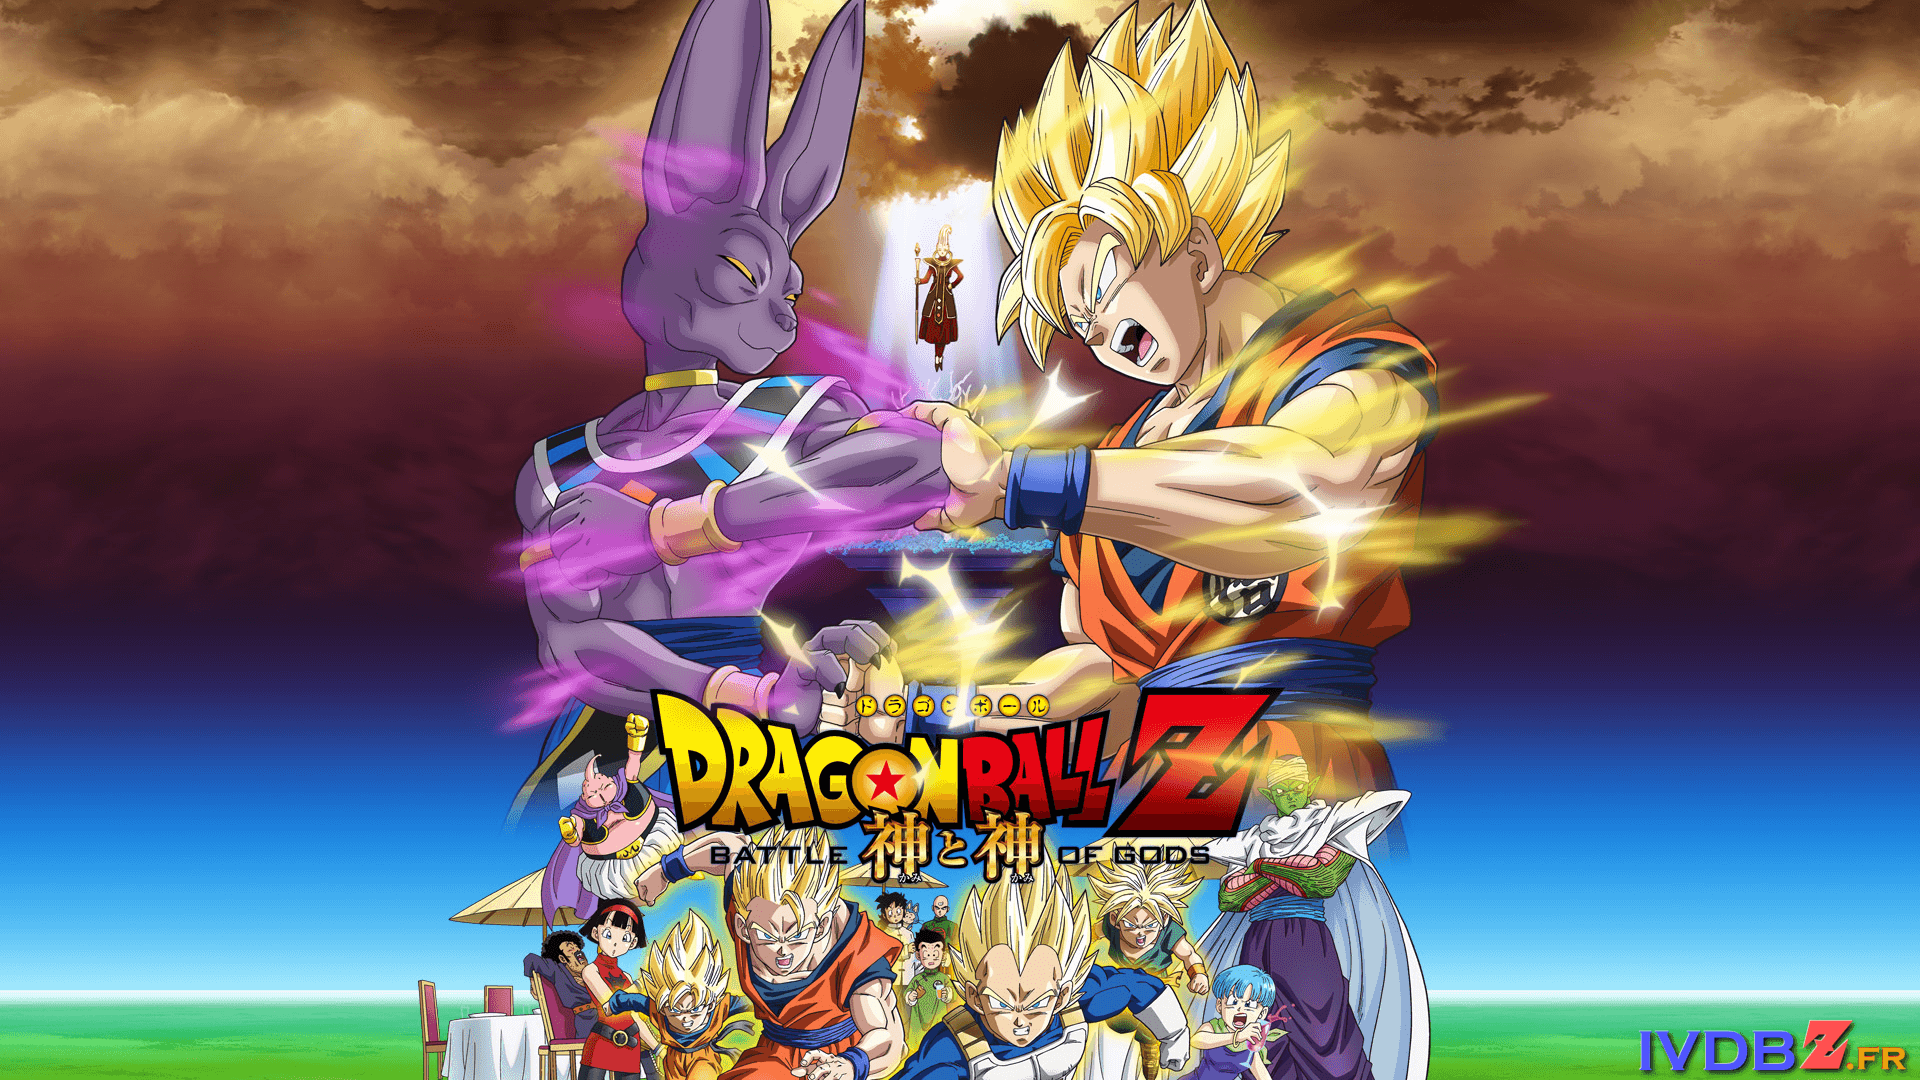 Dragon Ball Z: Battle of Gods HD Wallpaper. Background